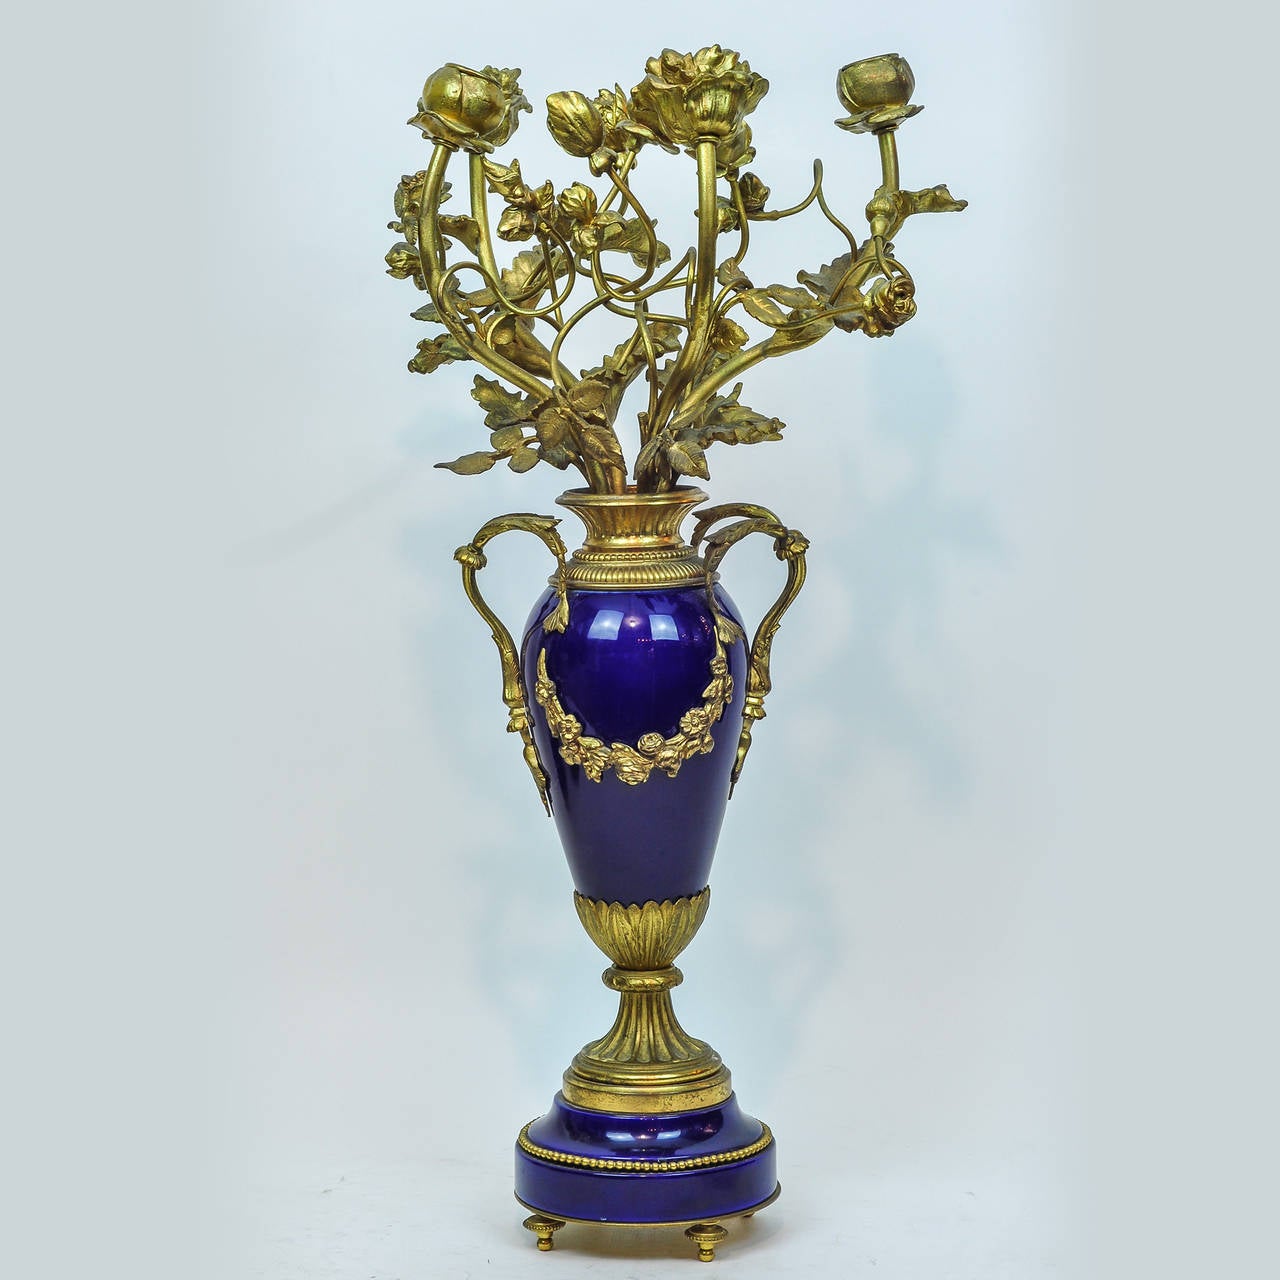 A Louis XVI Style Three Piece Cobalt blue Porcelain and Bronze Clock Garniture Set
Clock: H 22-1/2